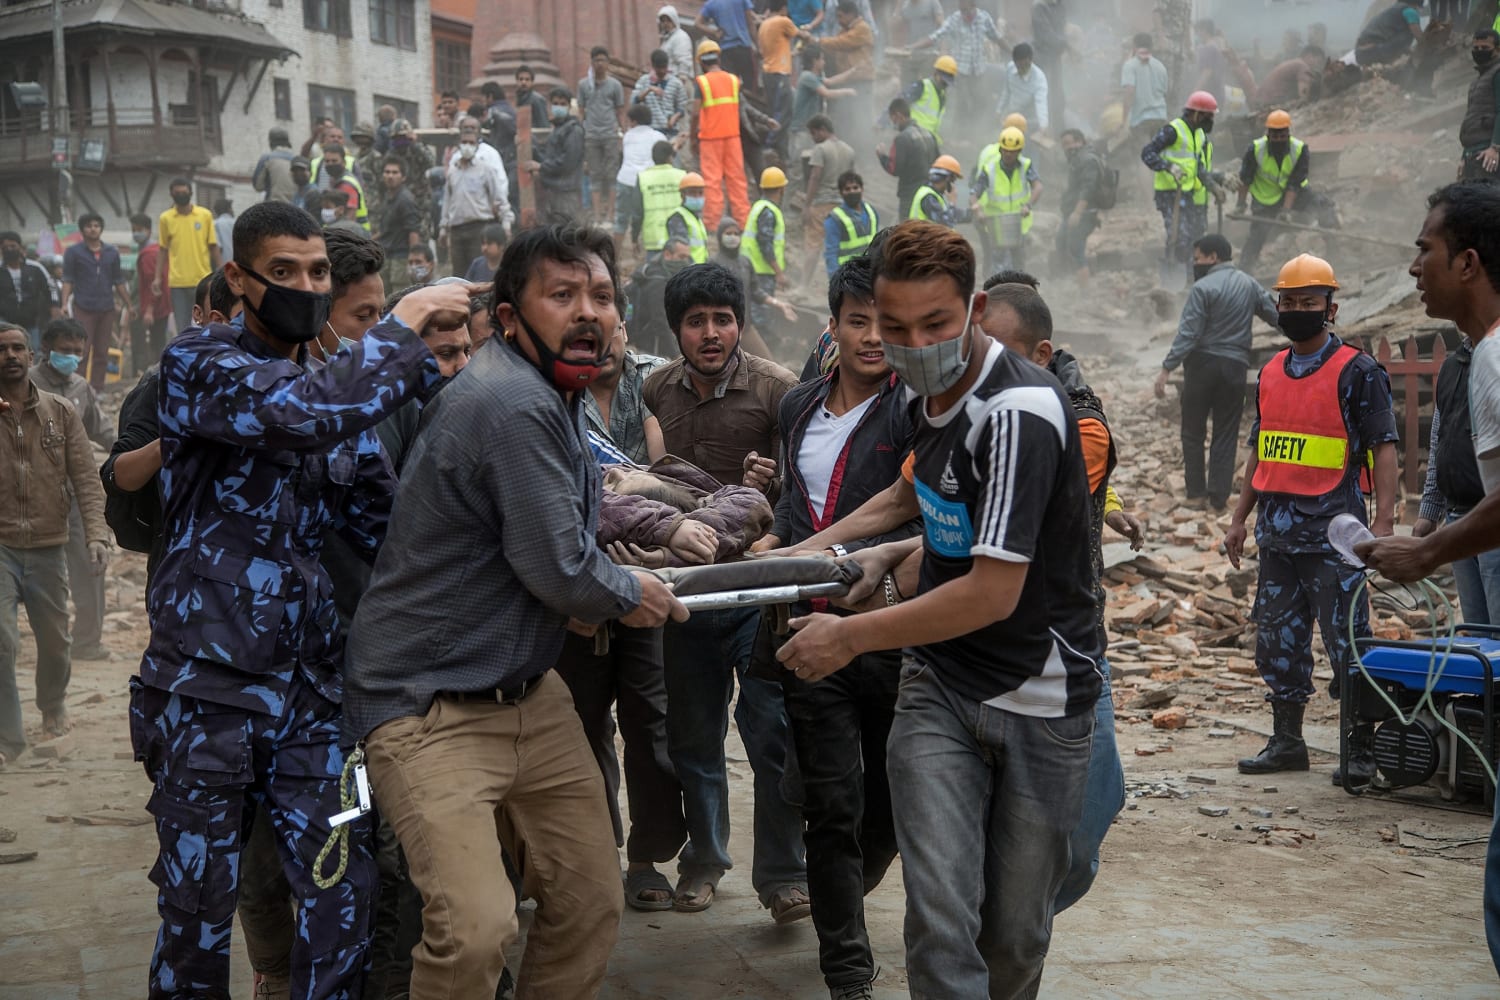 Nepal Earthquake: Charities, Nations Rush to Offer Aid - NBC News.com